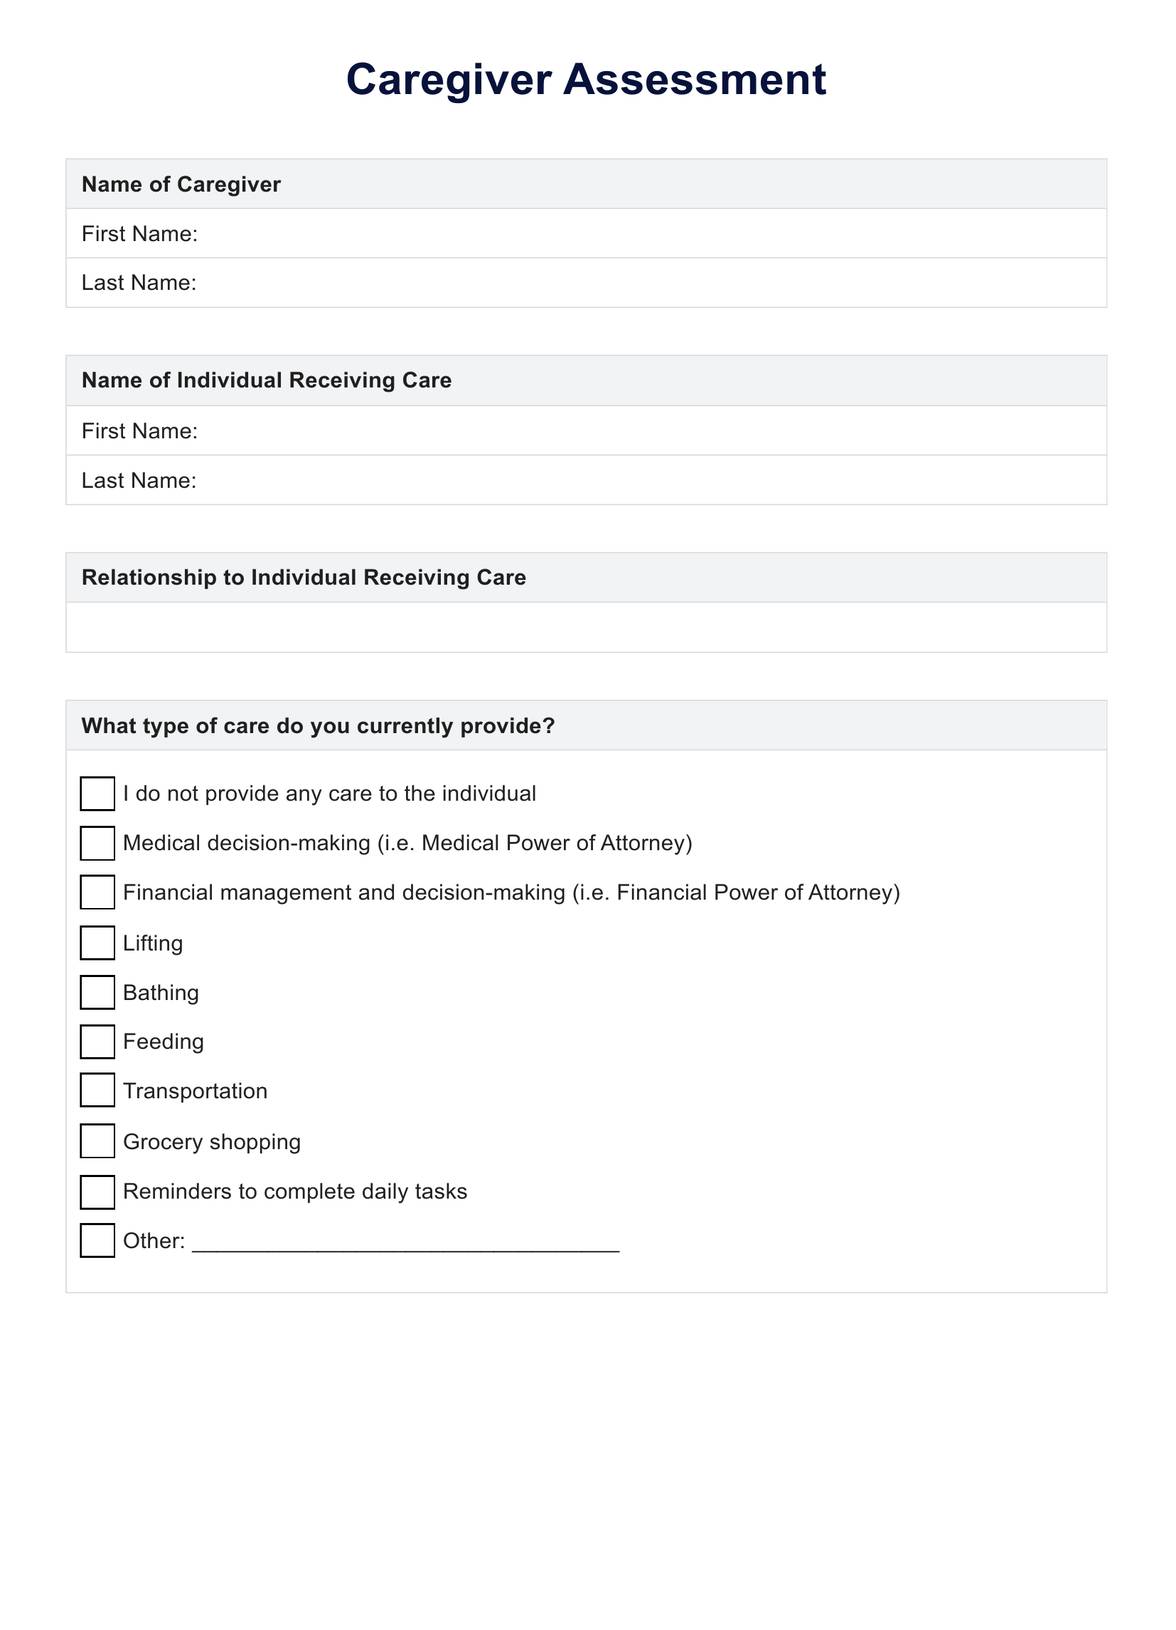 Caregiver Assessment PDF Example